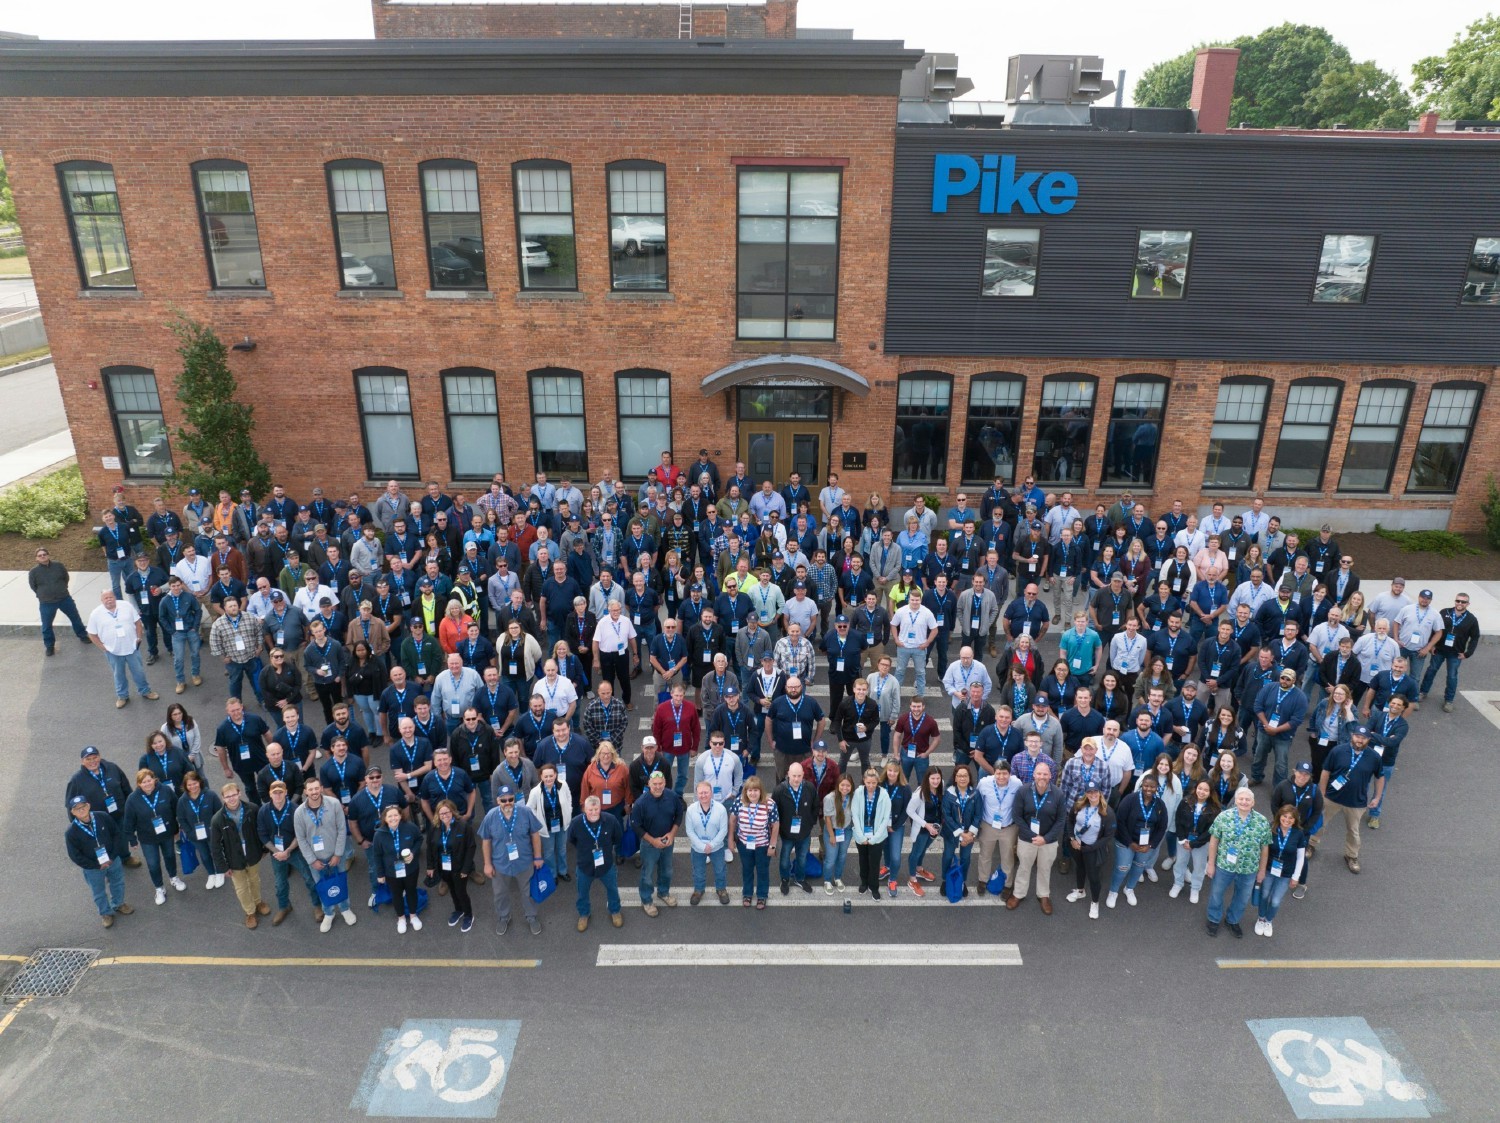 The Pike Companies Photo